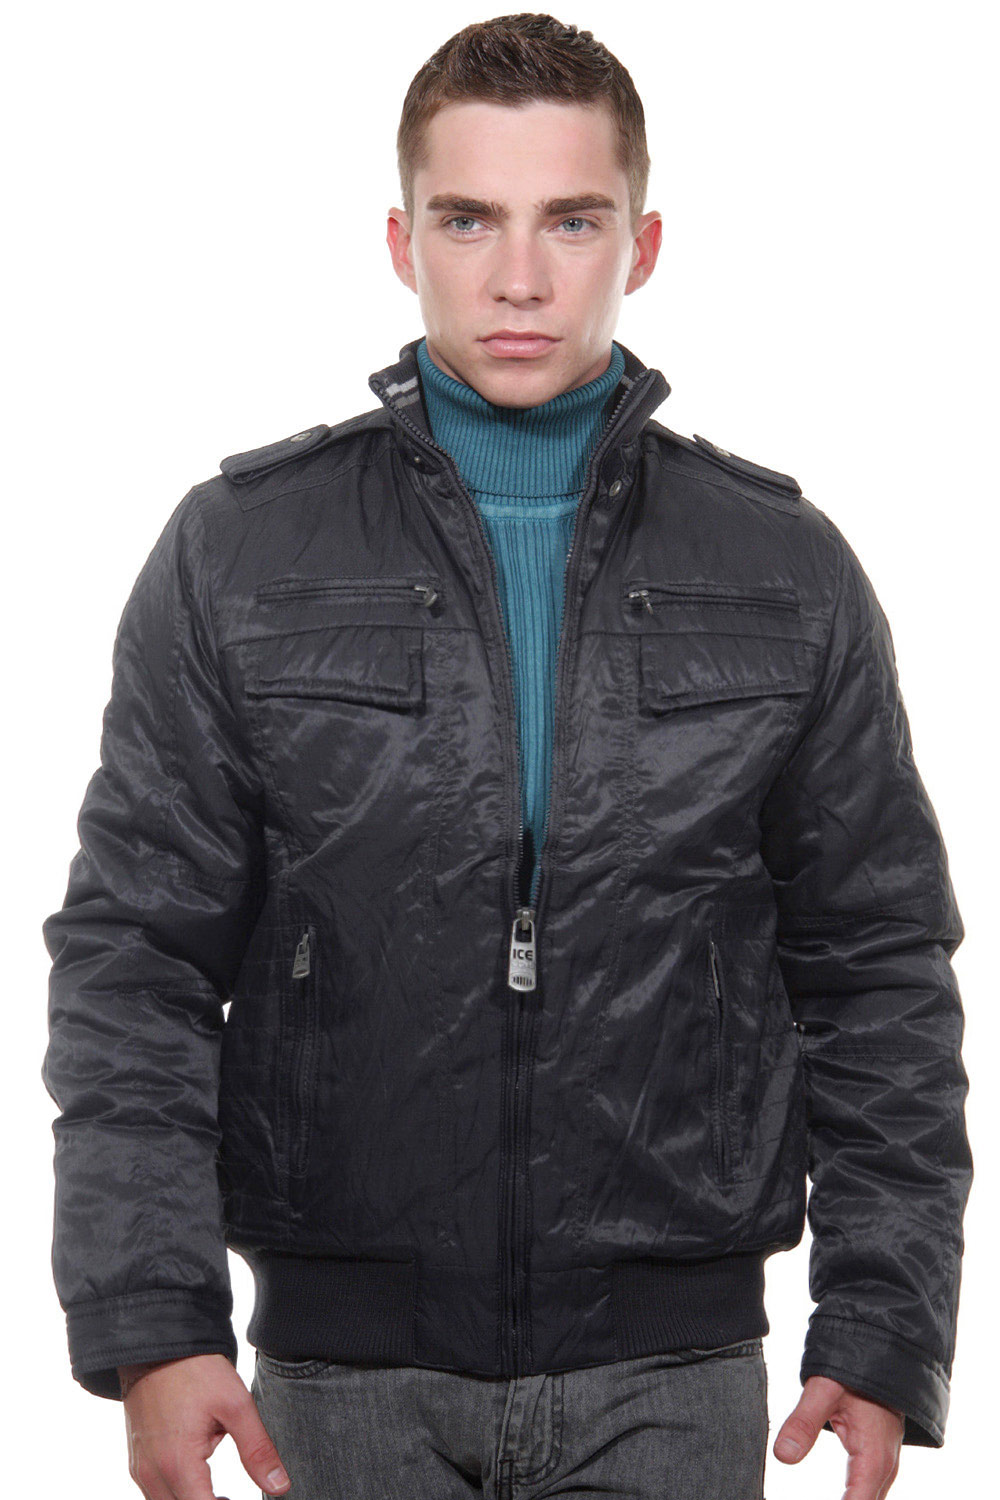 OBOY STREETWEAR jacket slim fit at oboy.com